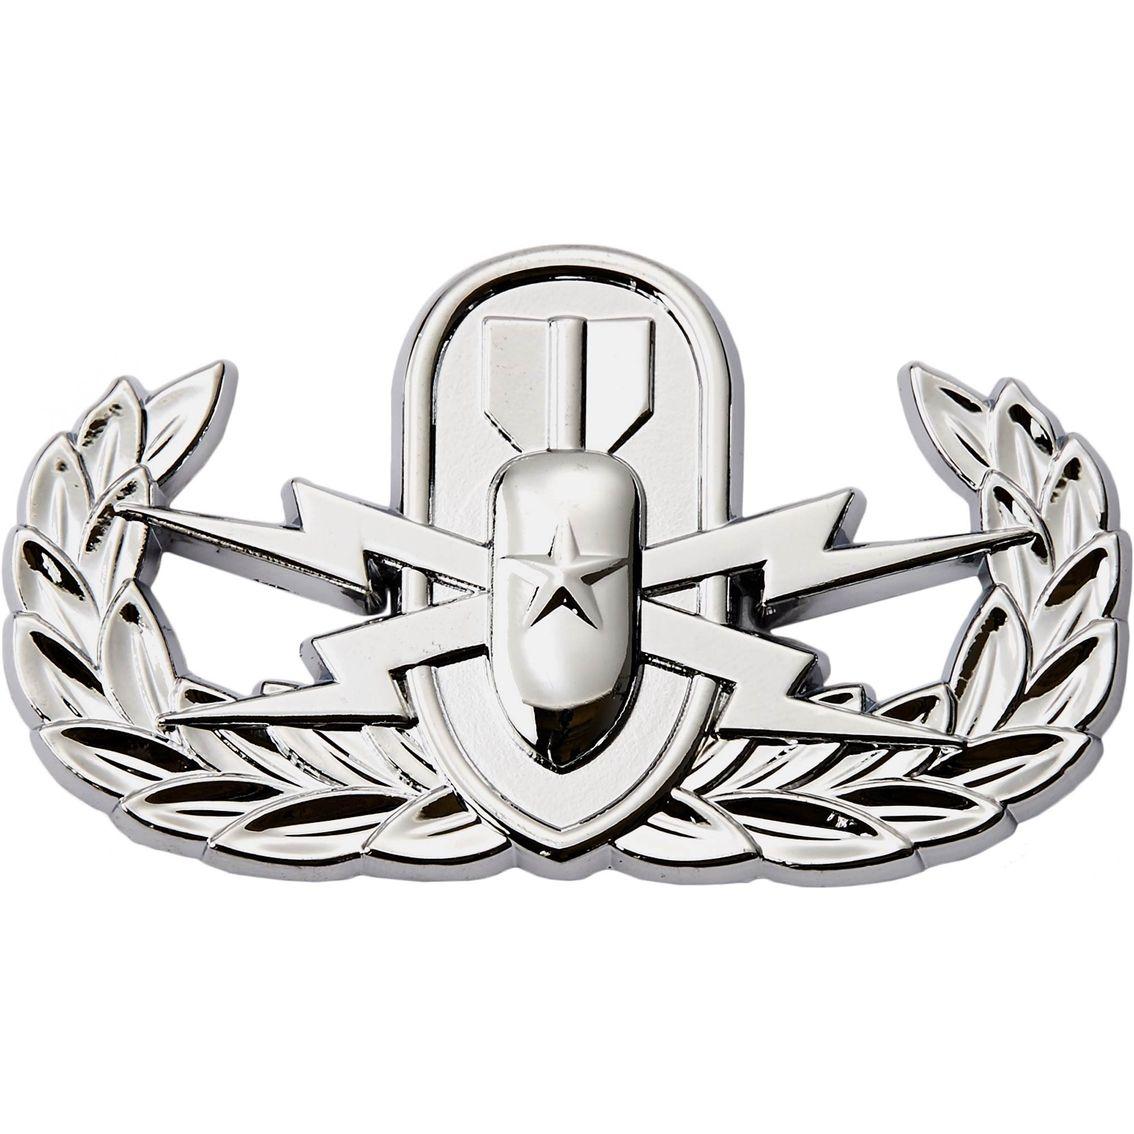 EOD Logo - Shadow Six Romeo Senior Eod Emblem | Military Logo Gear | Military ...